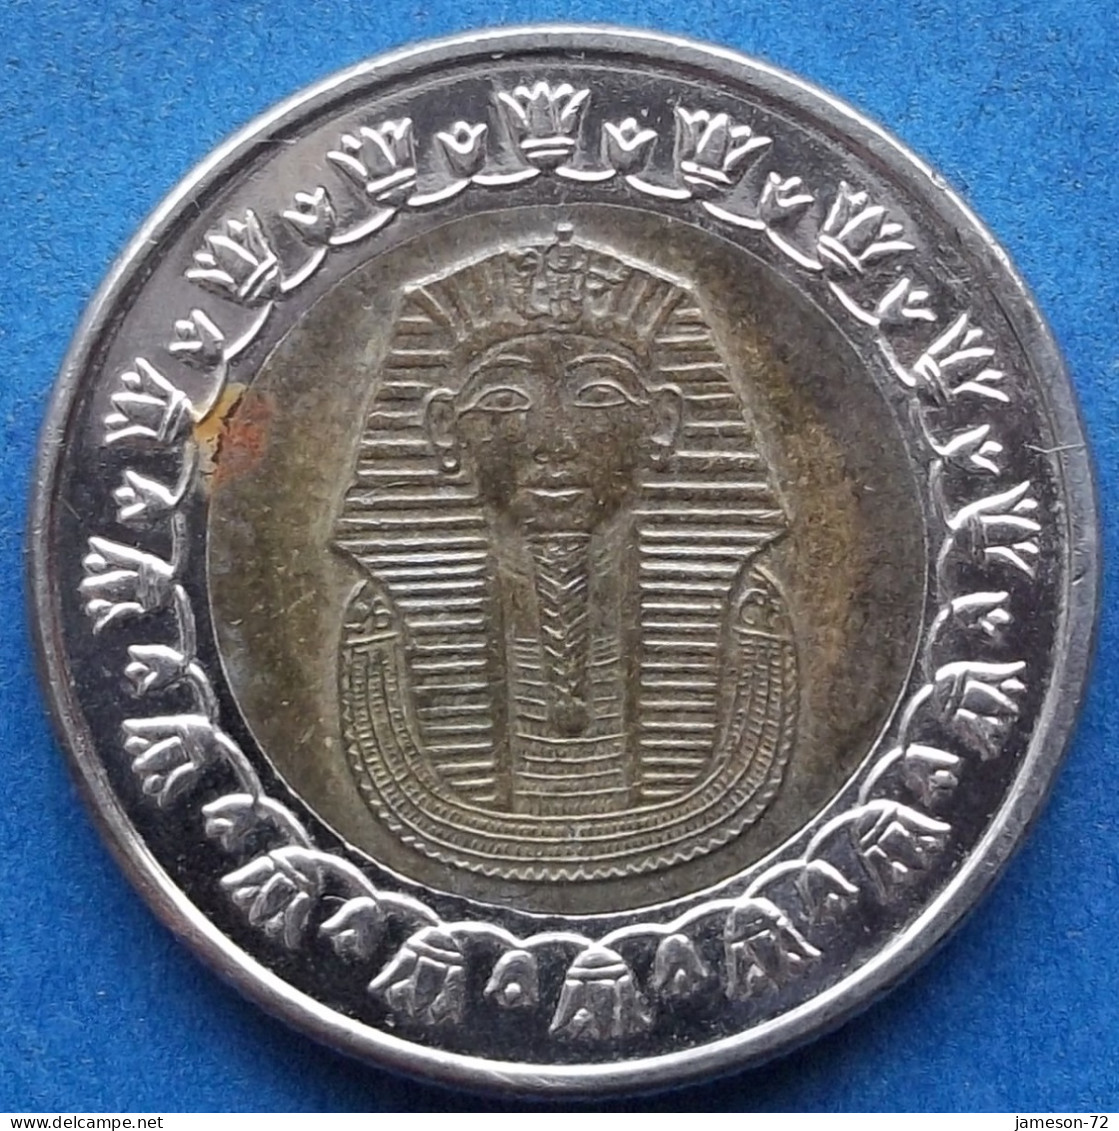 EGYPT - 1 Pound AH1443 2022AD "Tutankhaman's Gold Mask" KM# 940a Arab Republic (1971) - Edelweiss Coins - Egypte